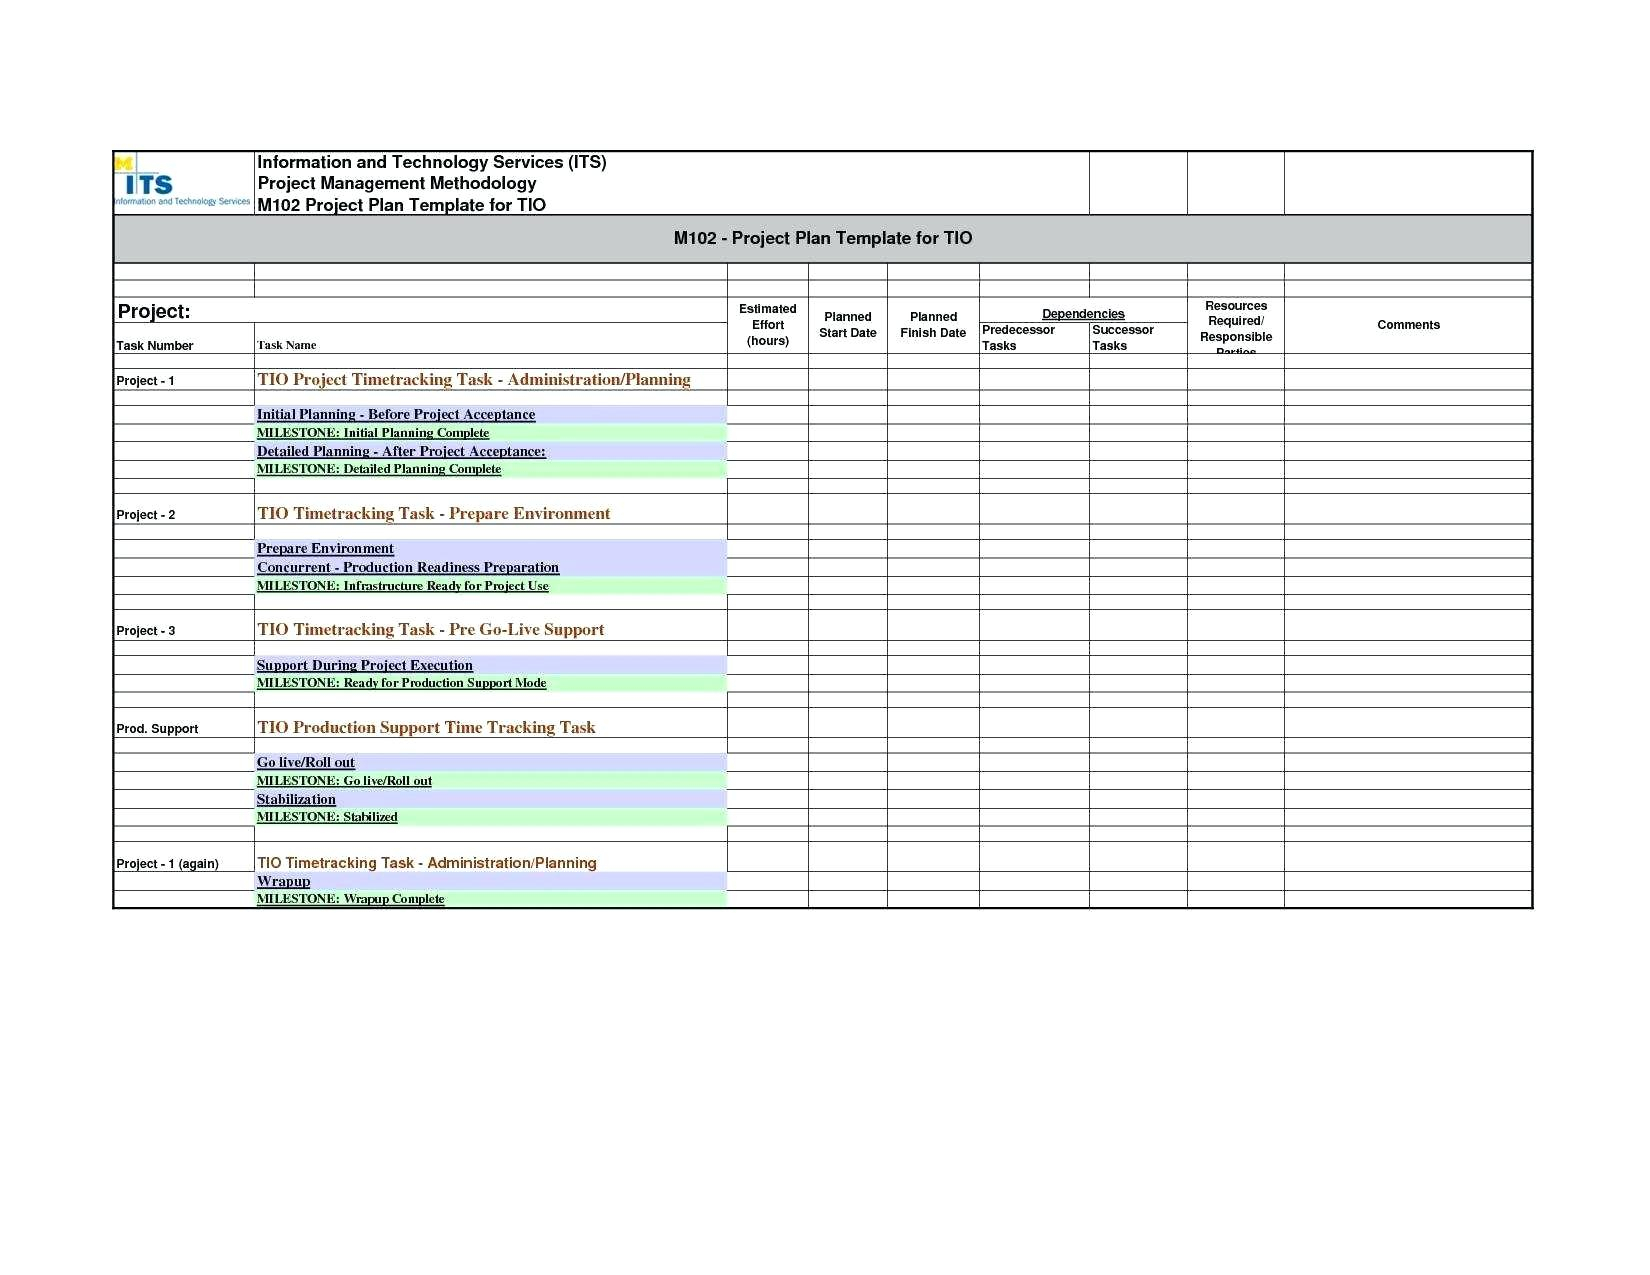 Construction Spreadsheet Templates Free throughout Project Management Spreadsheet Templates Sample Free Construction